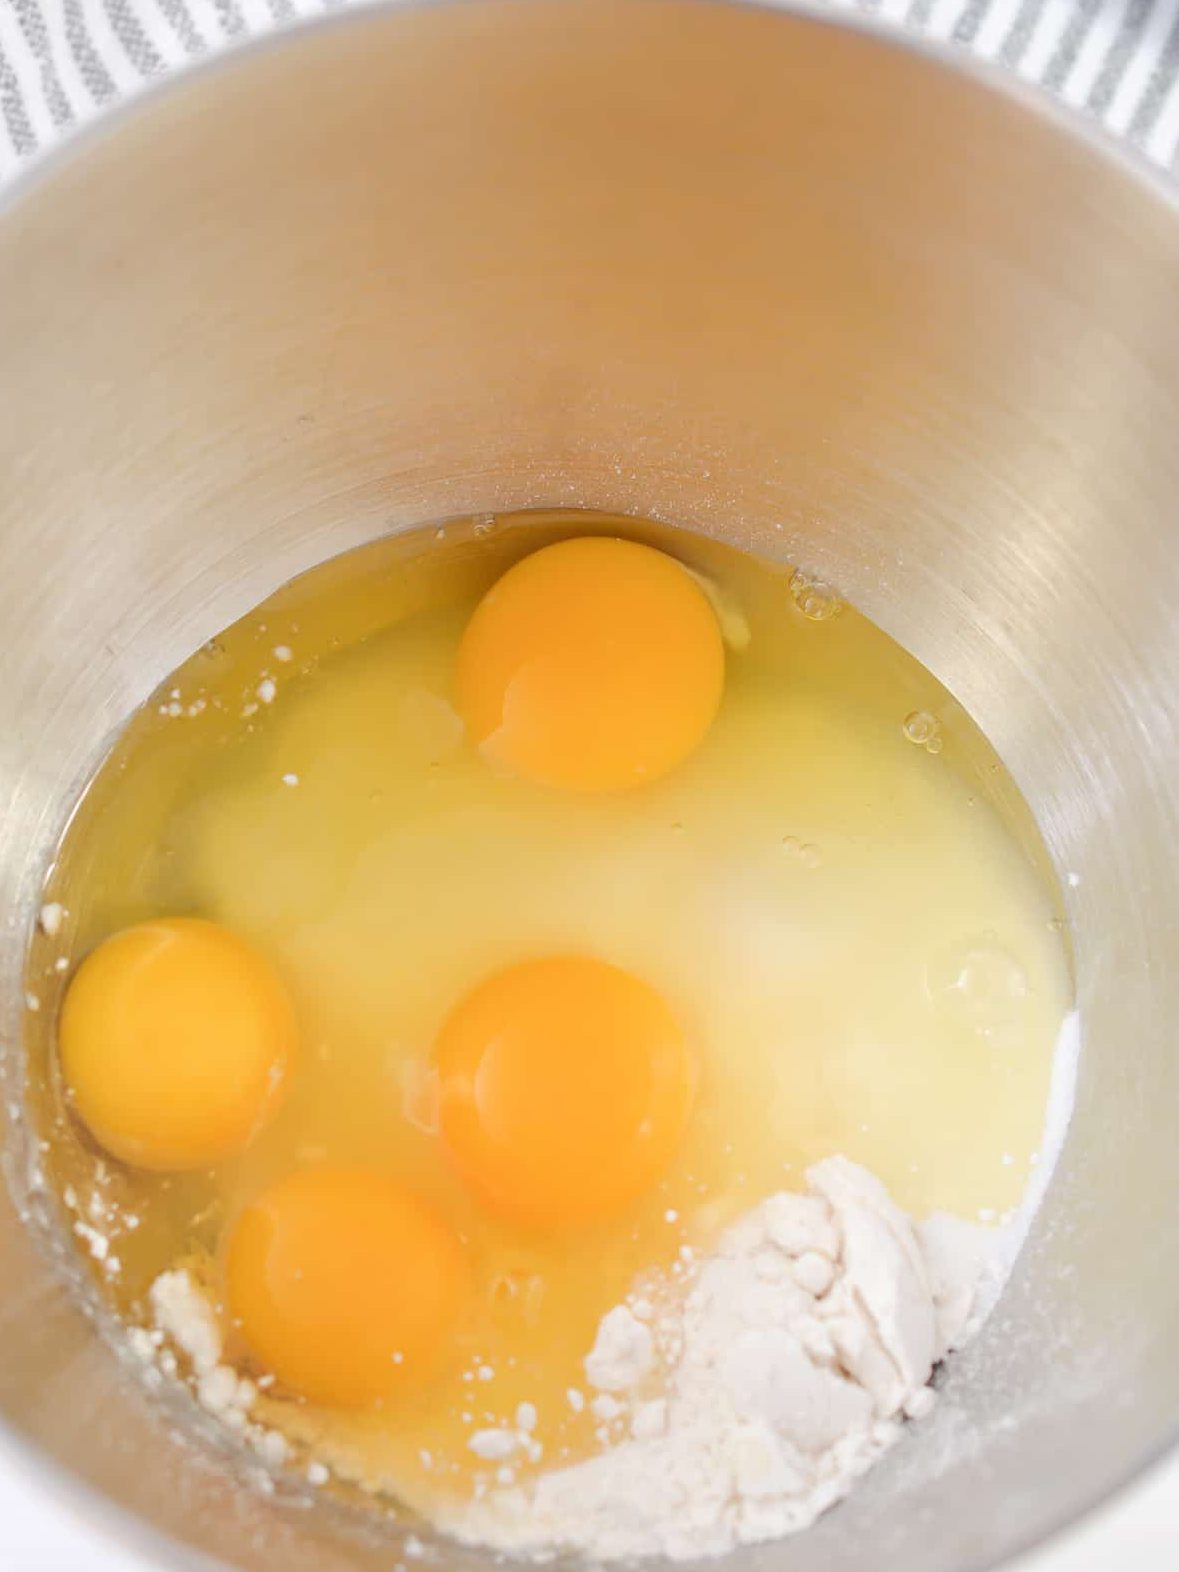 Add 4 large eggs.